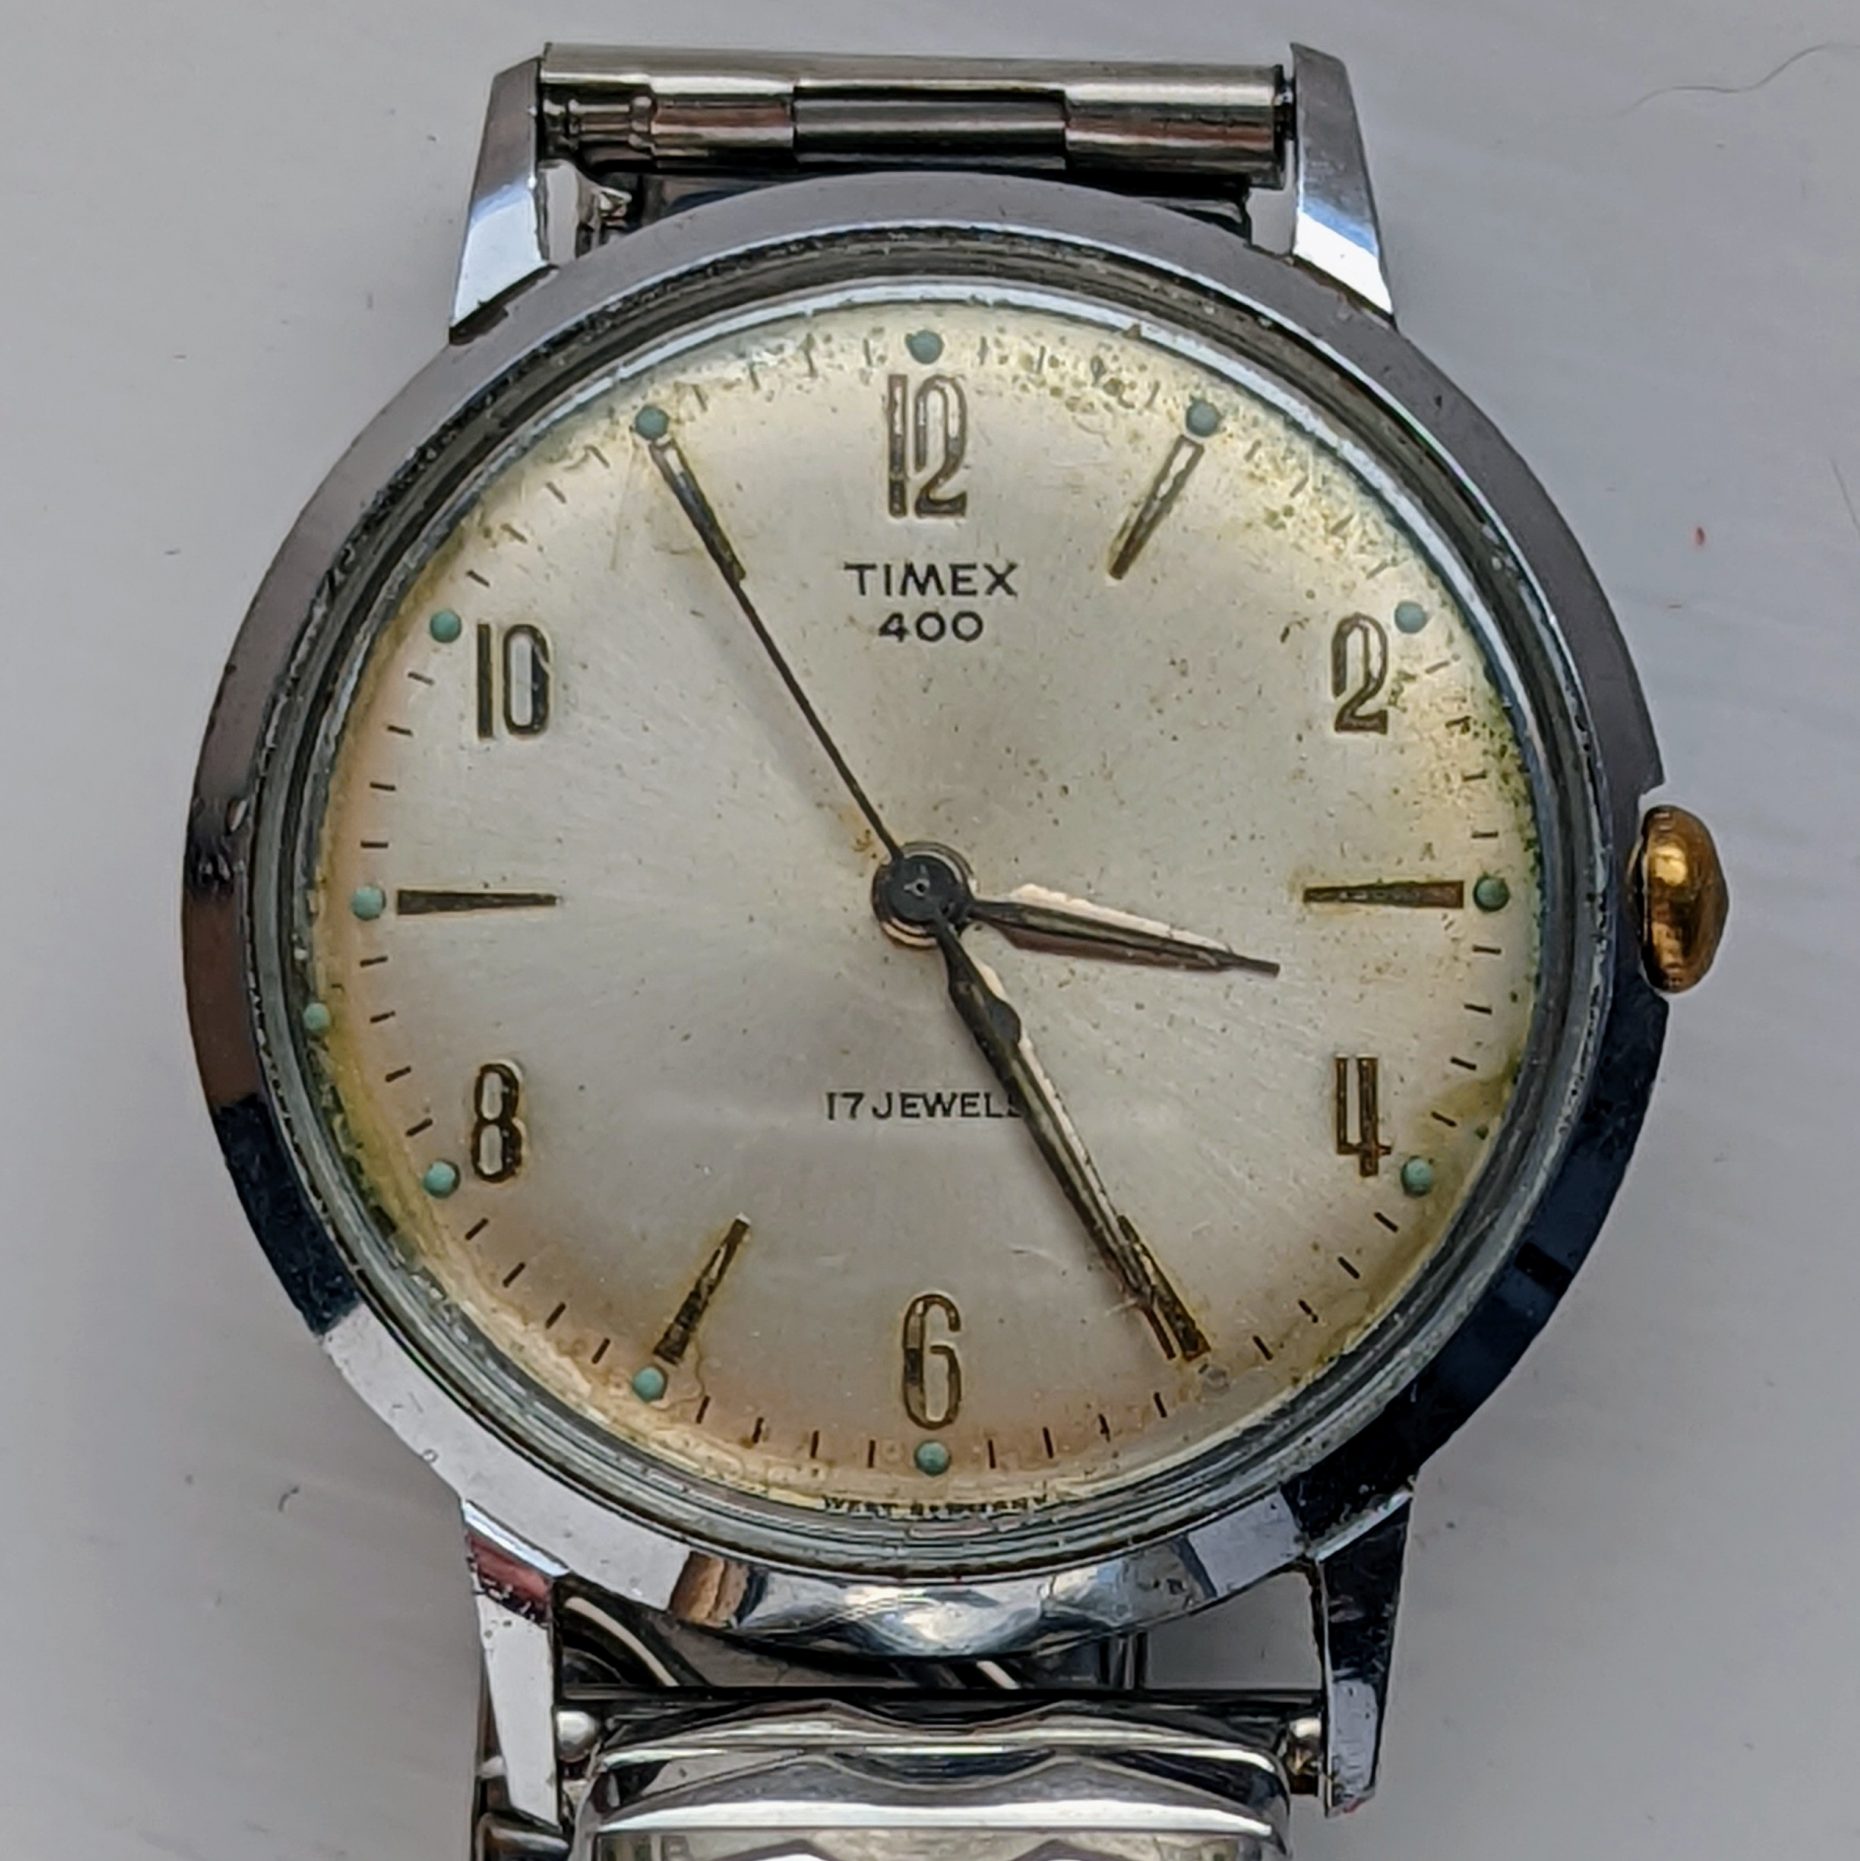 Timex 400 1961 Ref. 6077 70-661